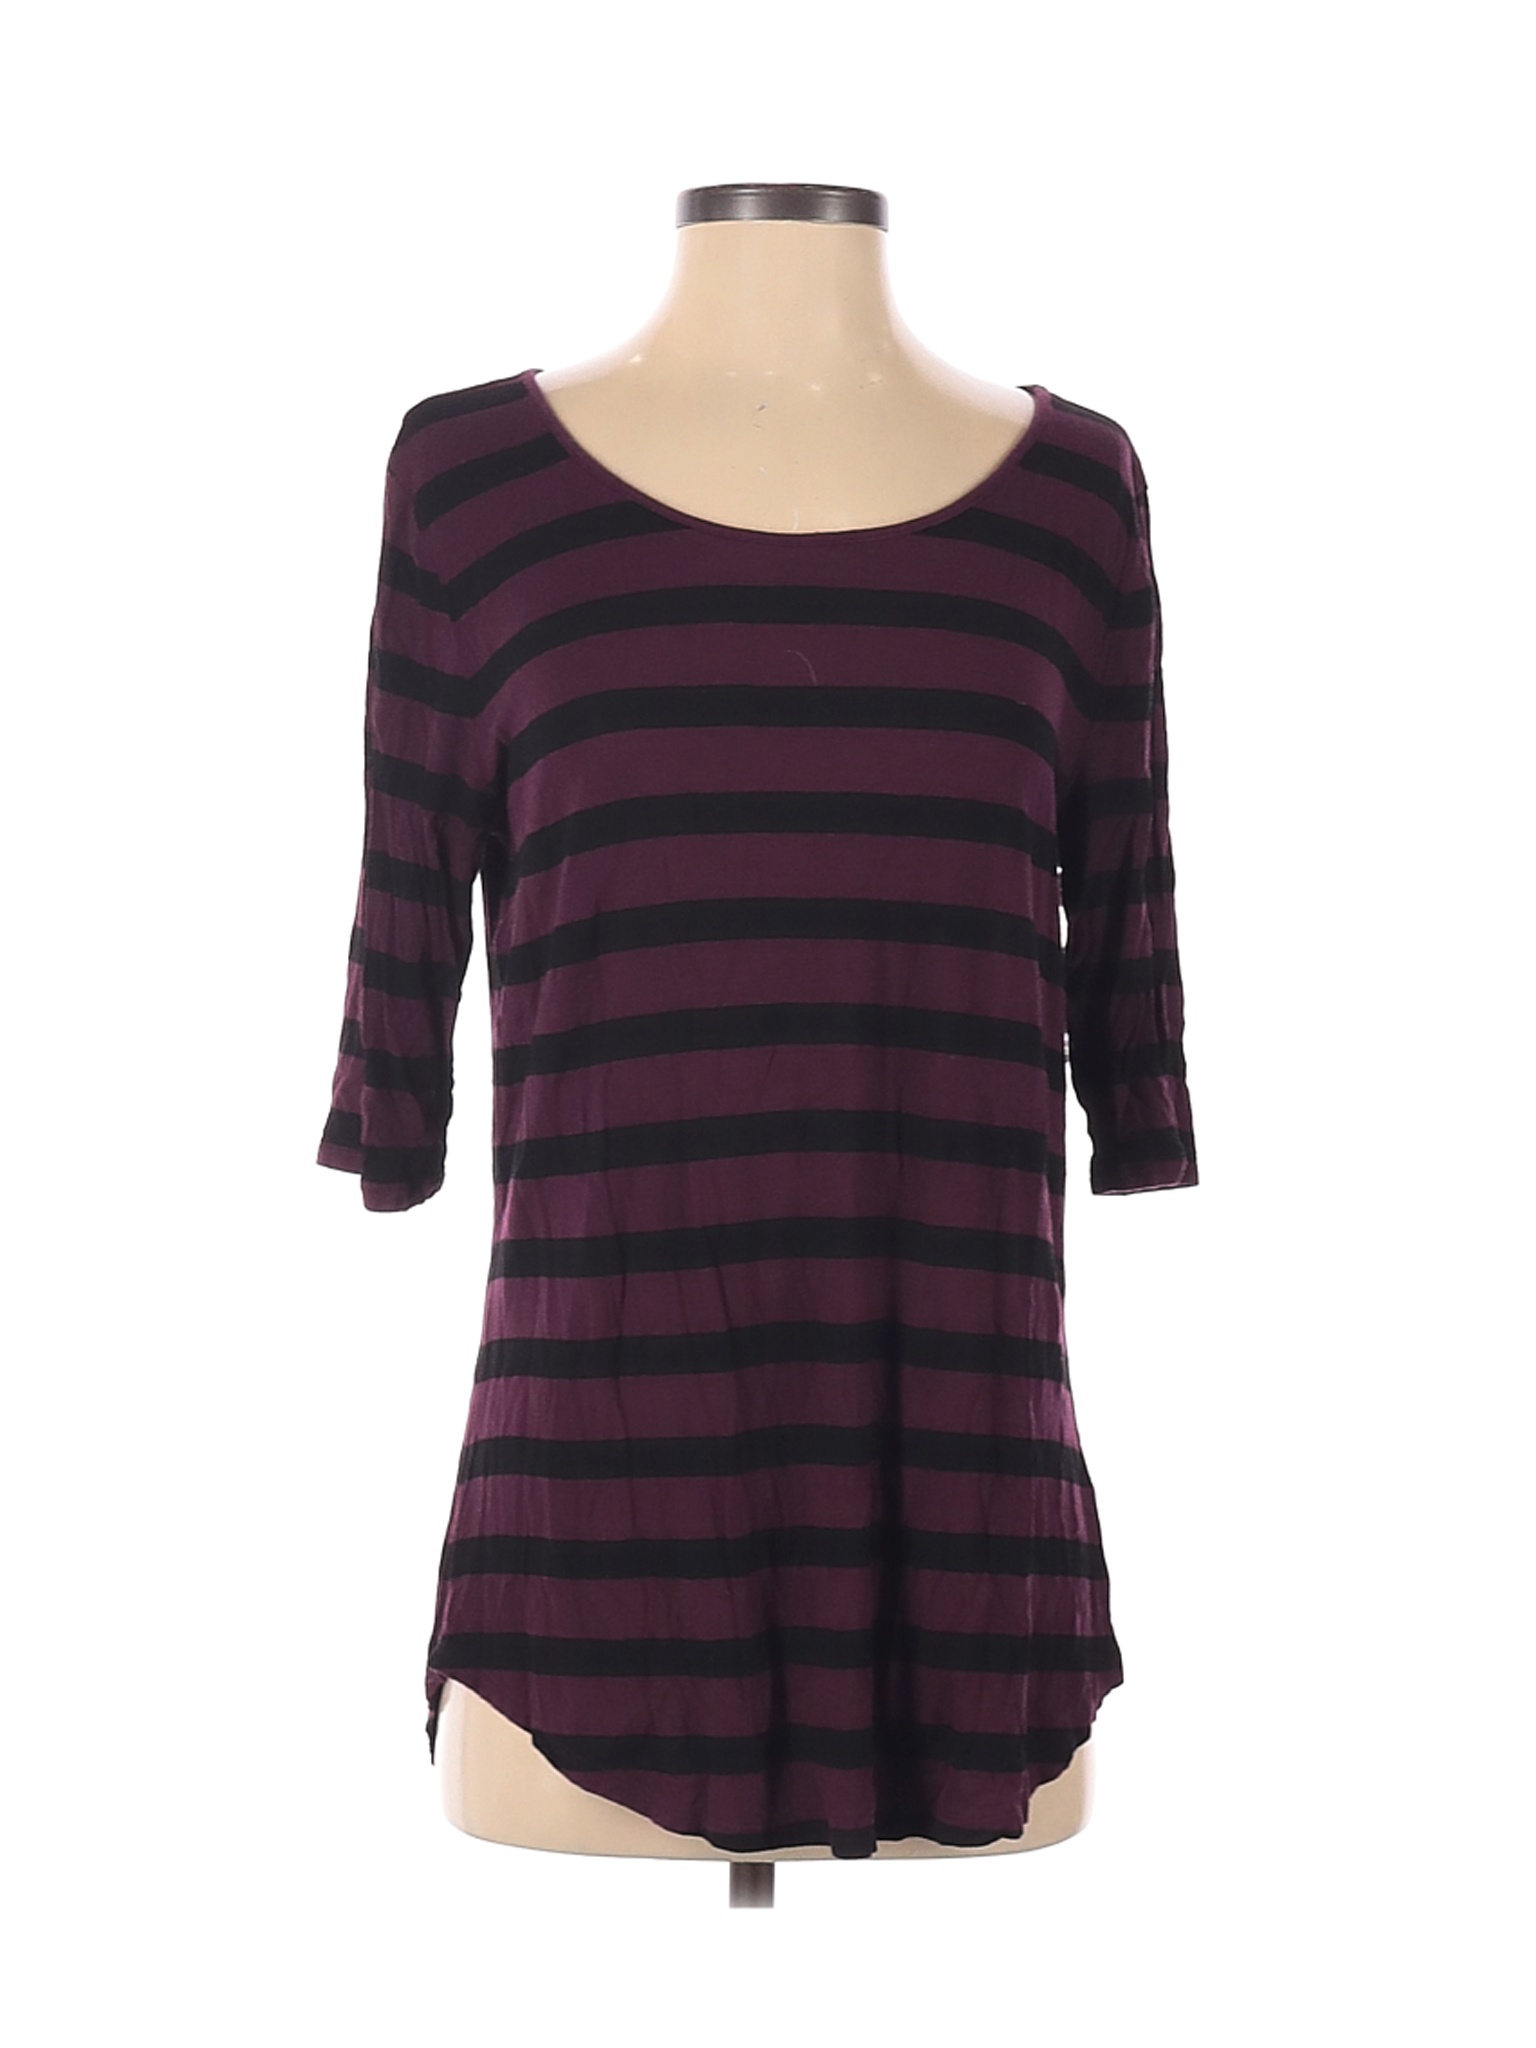 Apt. 9 Women Purple 3/4 Sleeve T-Shirt L | eBay